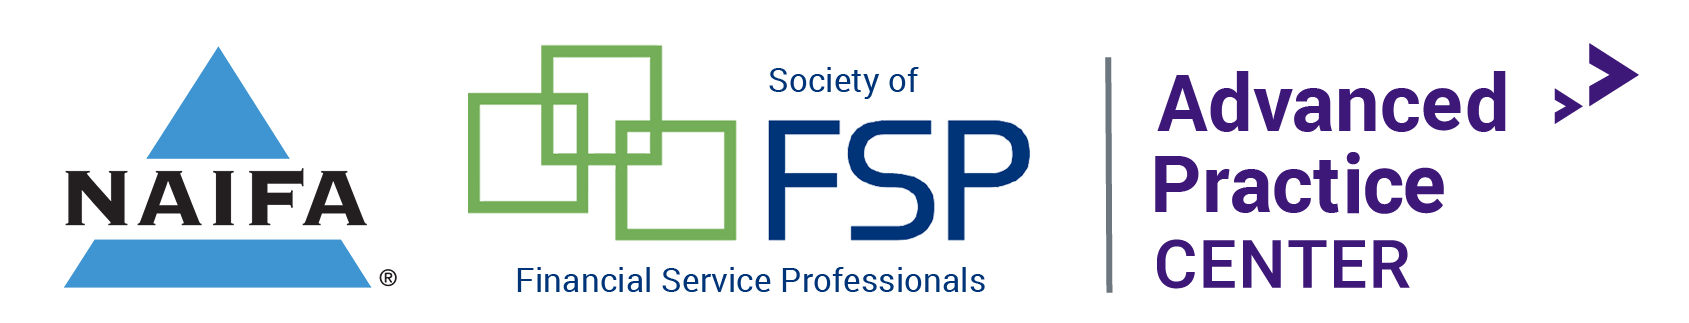 FSP Advanced Practice Center